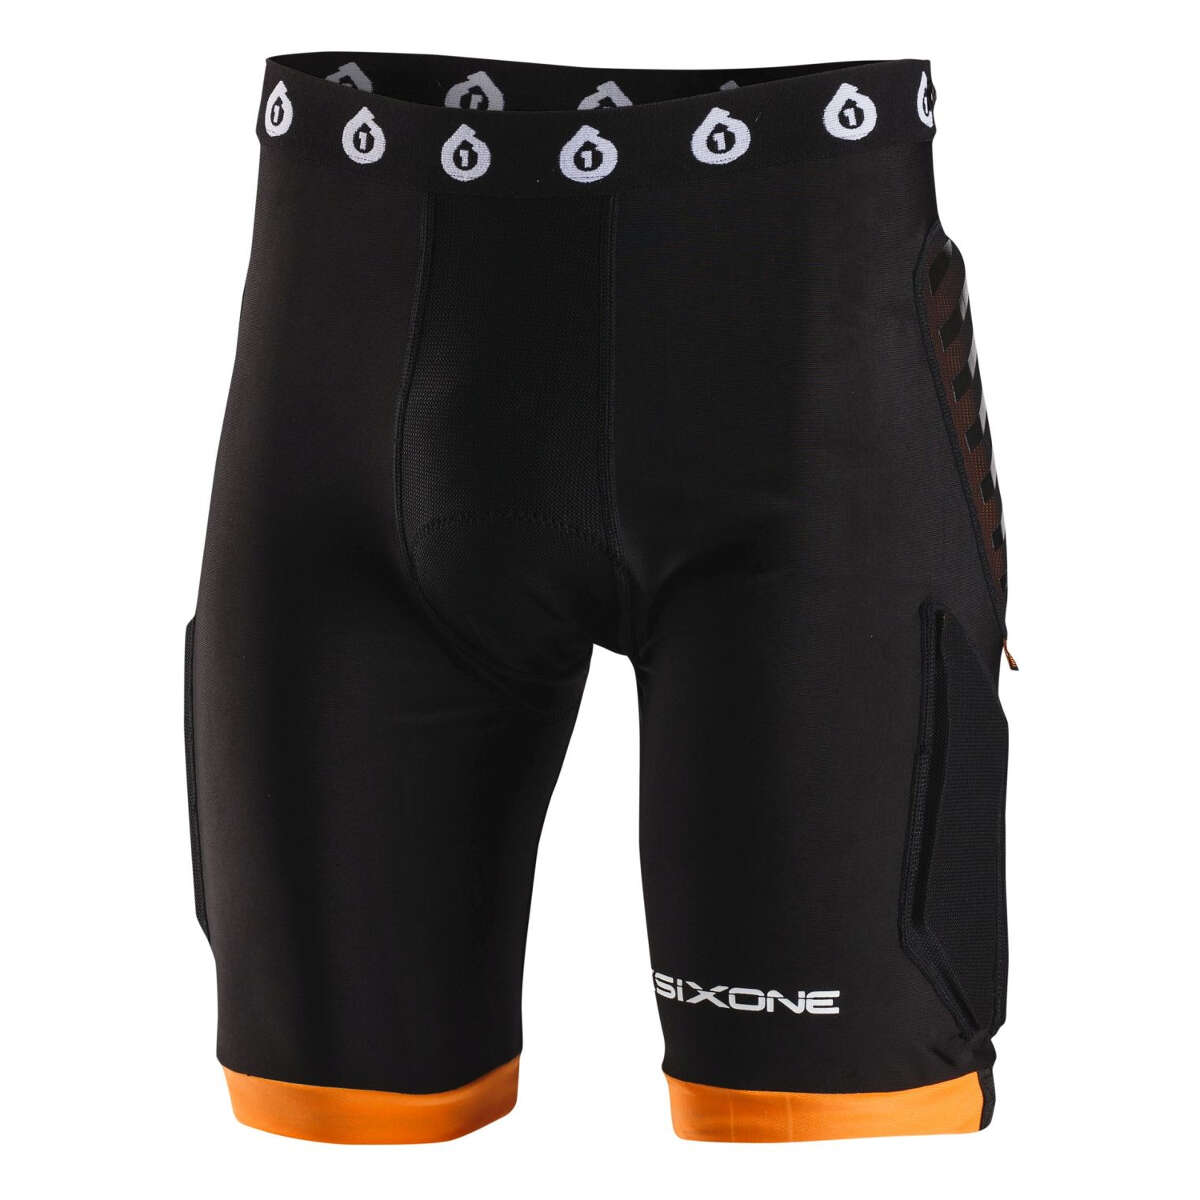 SixSixOne Sous-Shorts de Protection EVO Compression Black